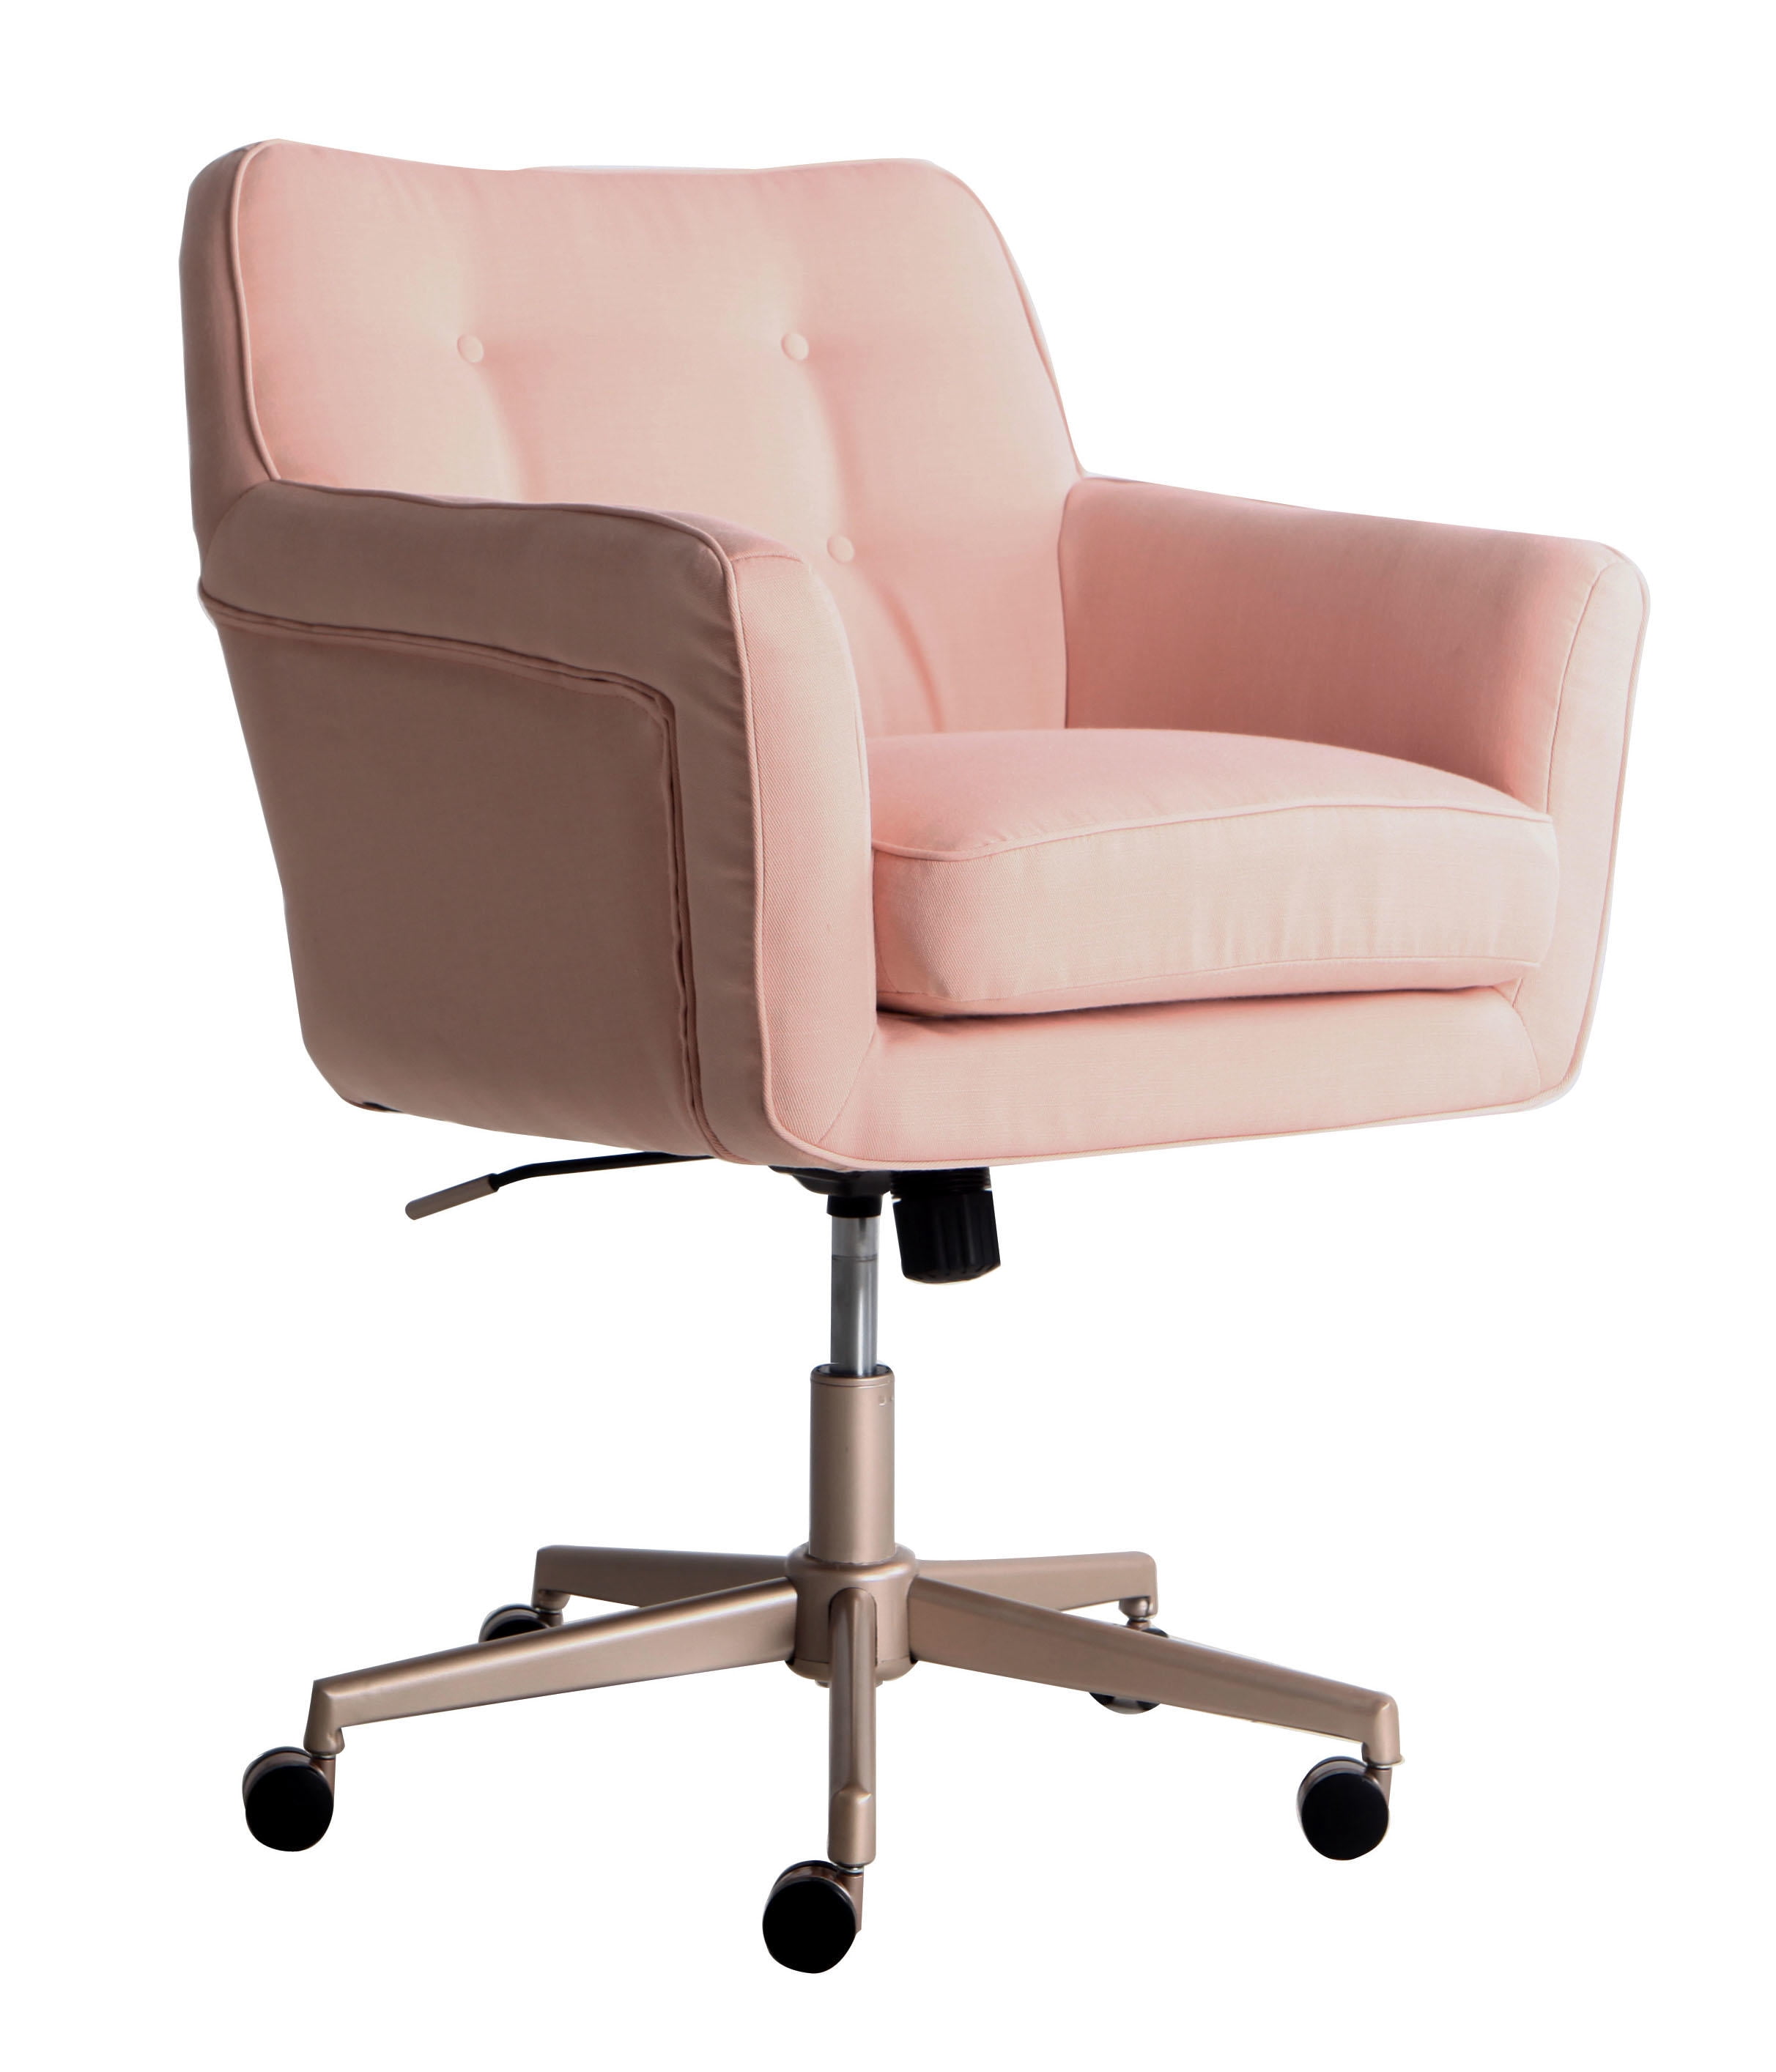 Serta Style Ashland Home Office Chair, Blush Pink Twill Fabric